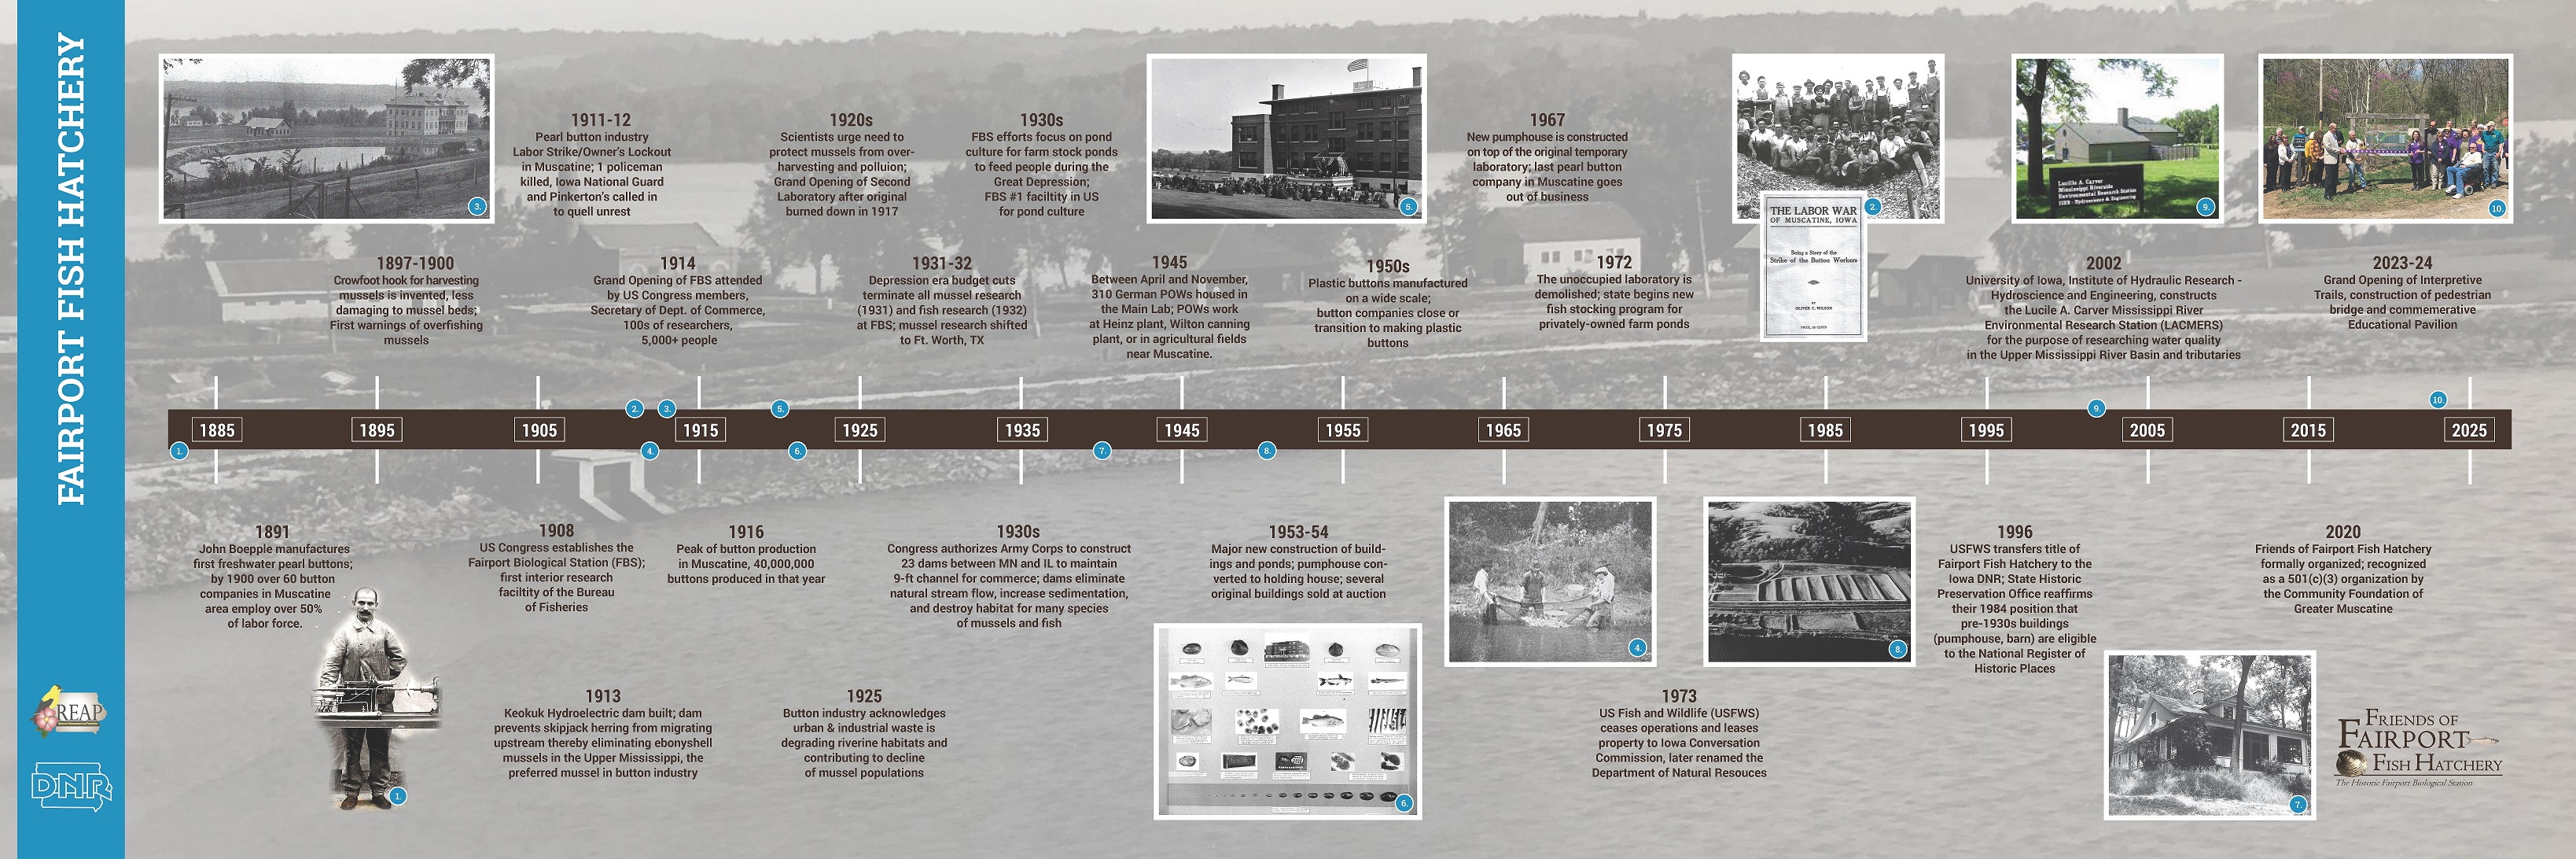 fairport hatchery history timeline